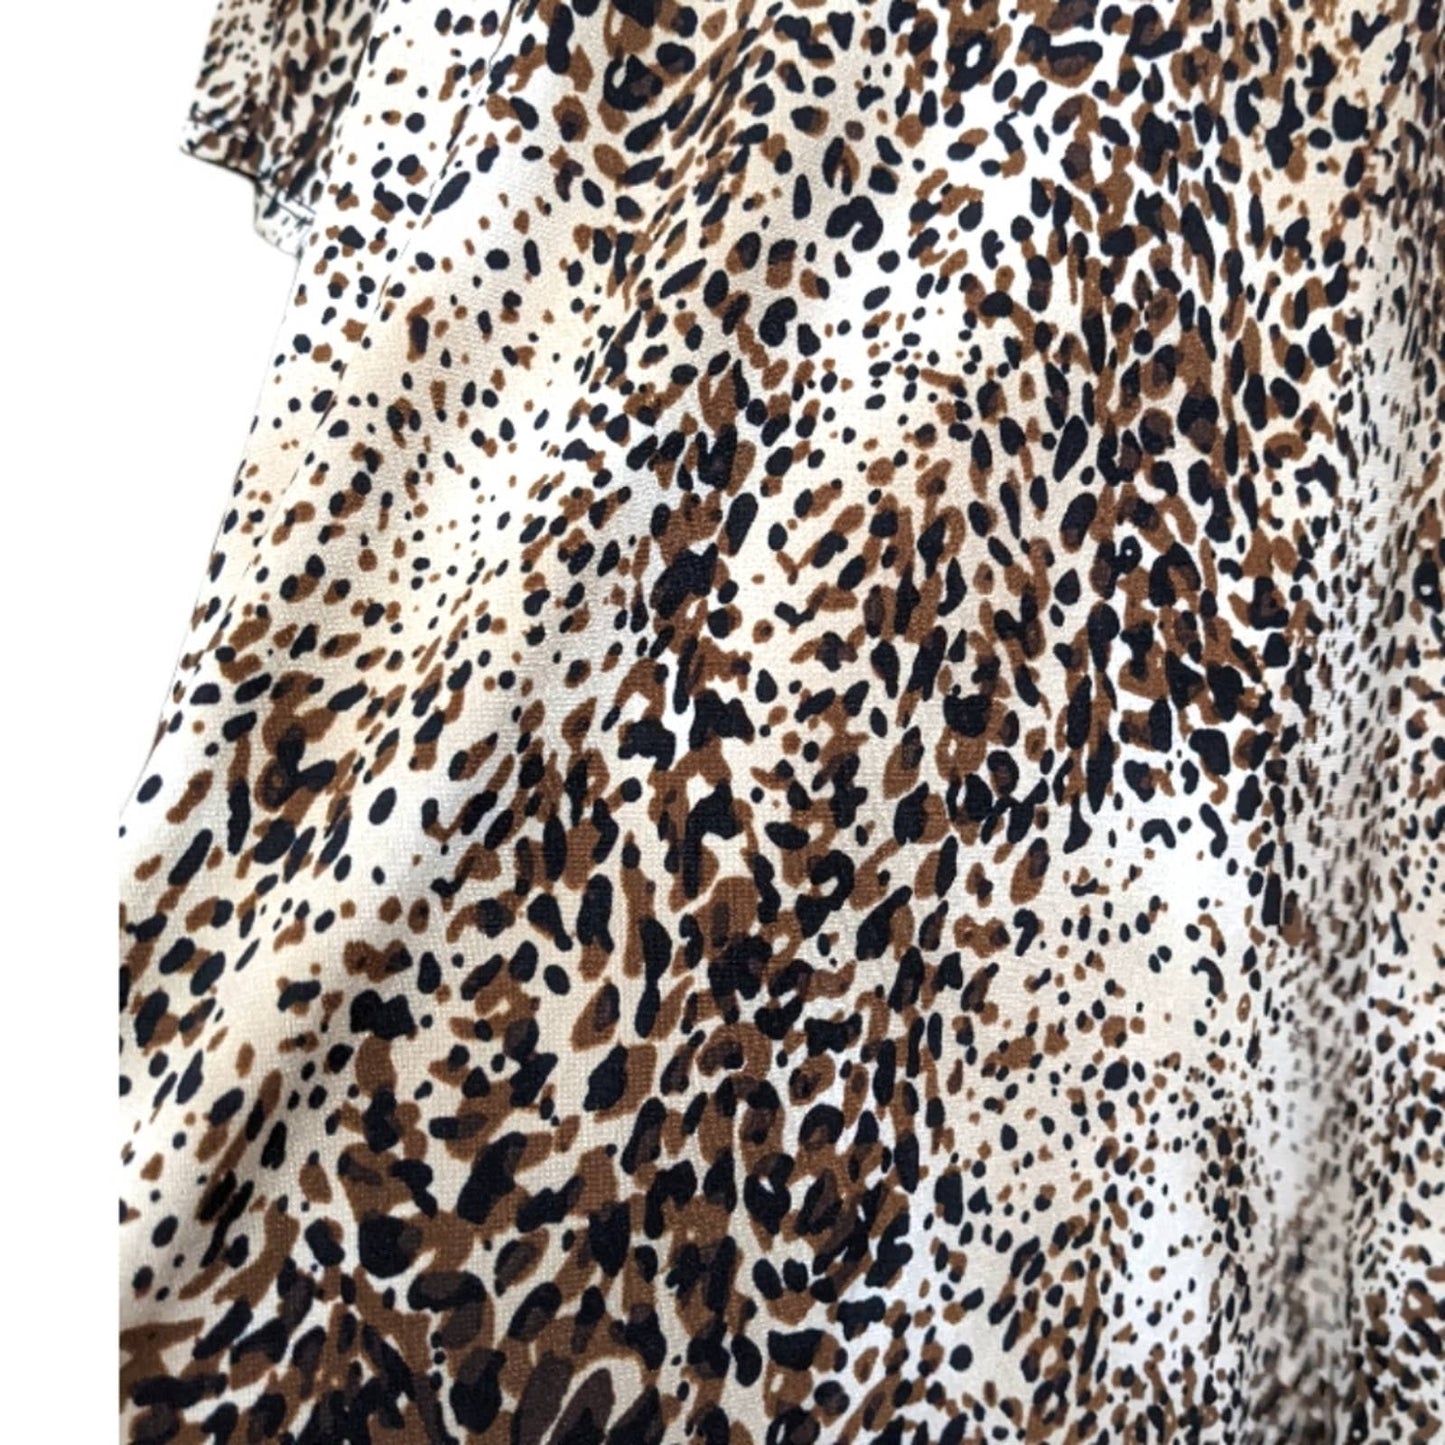 LAURA ASHLEY Tan Brown Leopard Cheetah Print Faux Wrap Career Top Plus 3X NEW